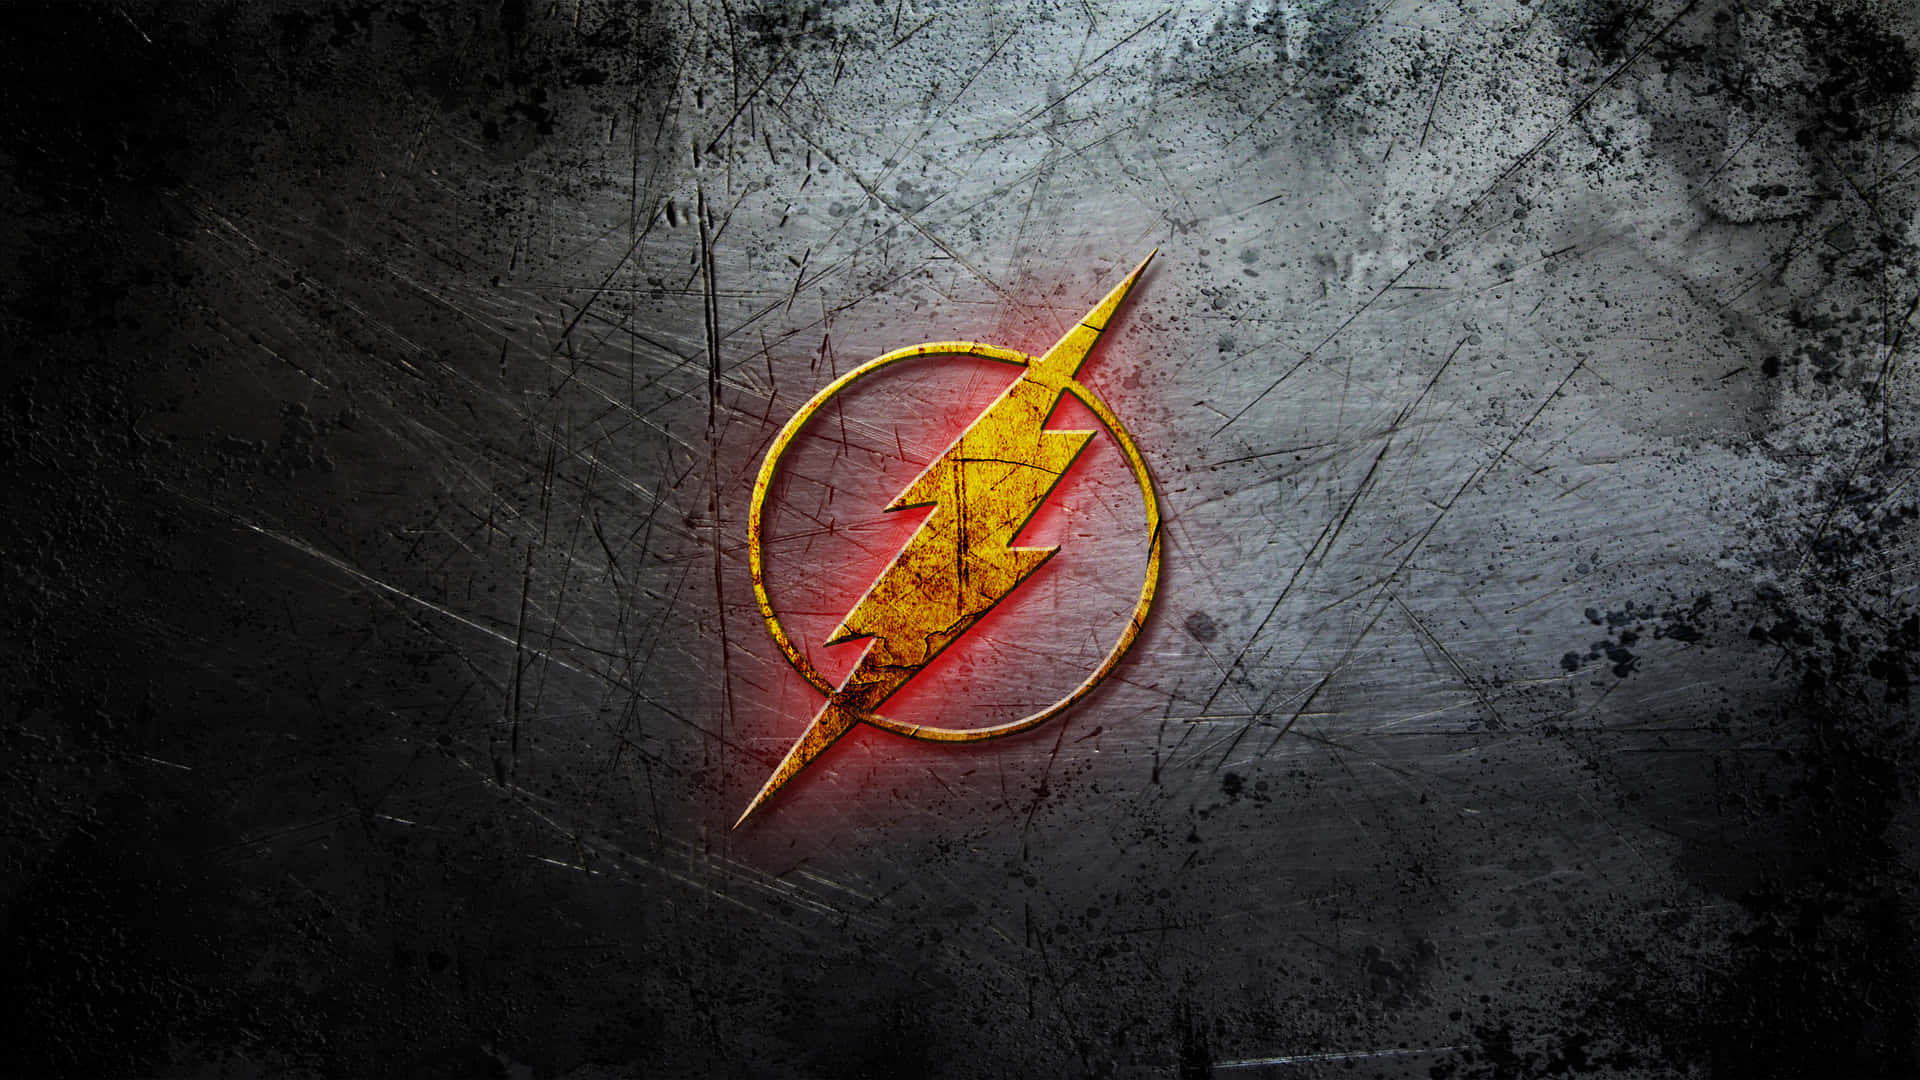 The Flash running with lightning streaks at full speed